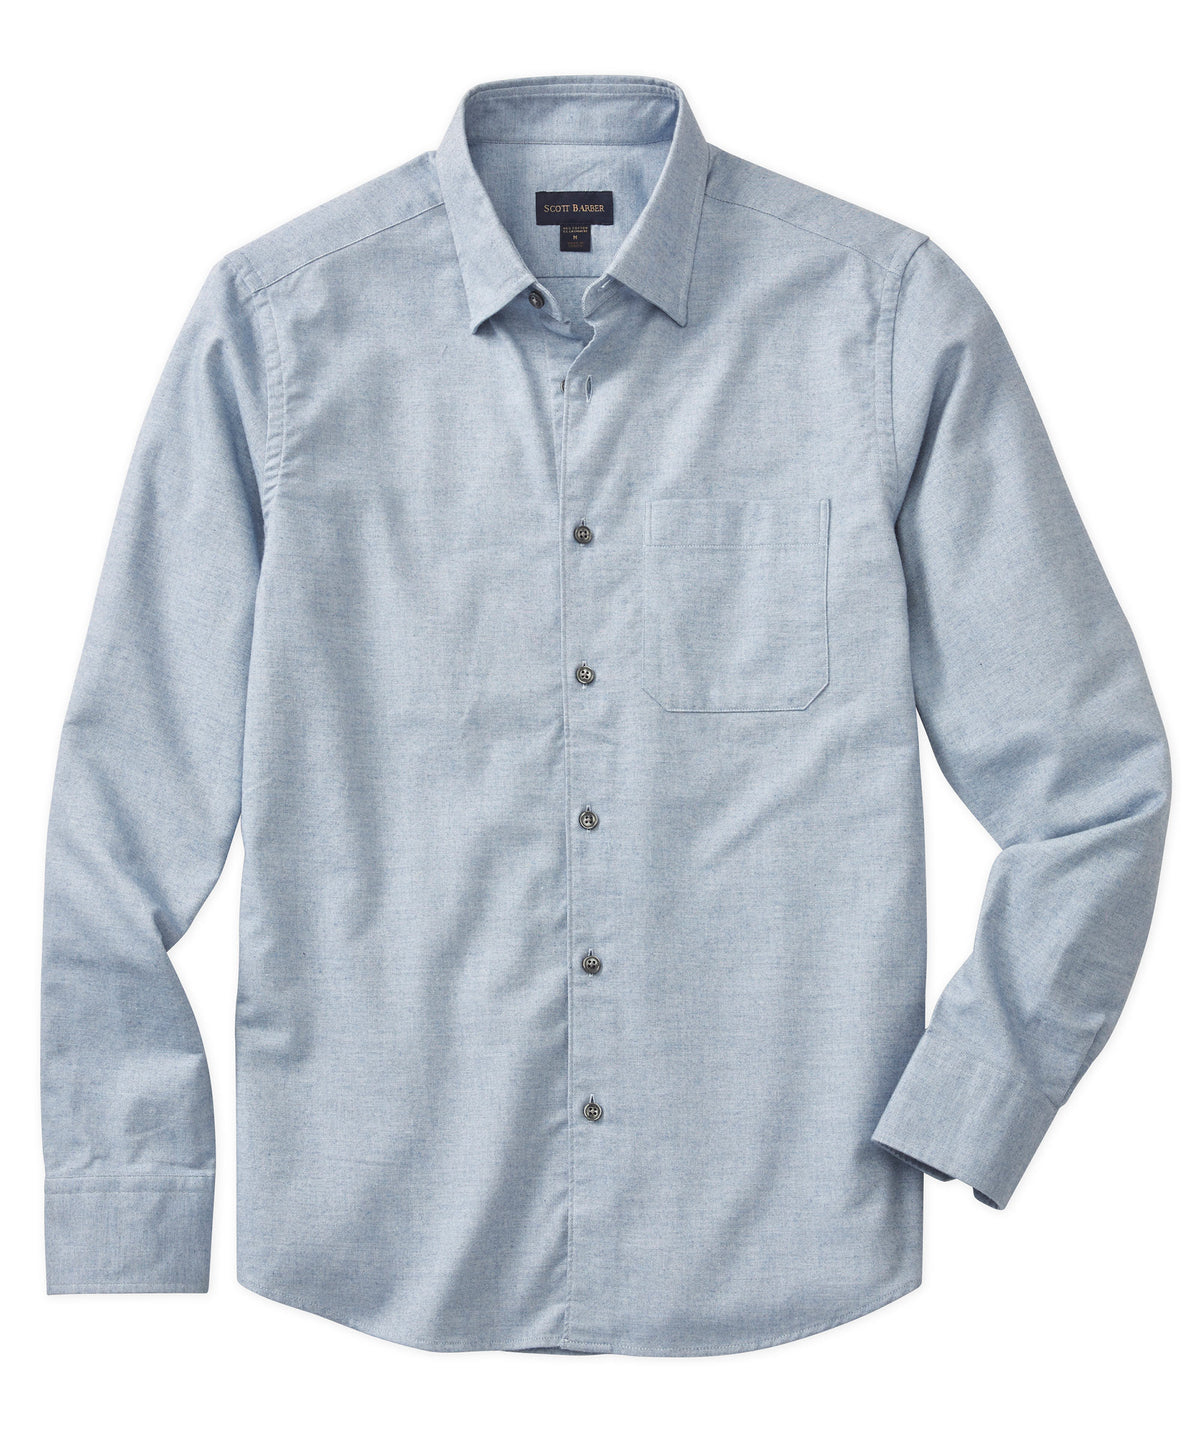 Scott Barber Cotton-Cashmere Solid Long Sleeve Sport Shirt